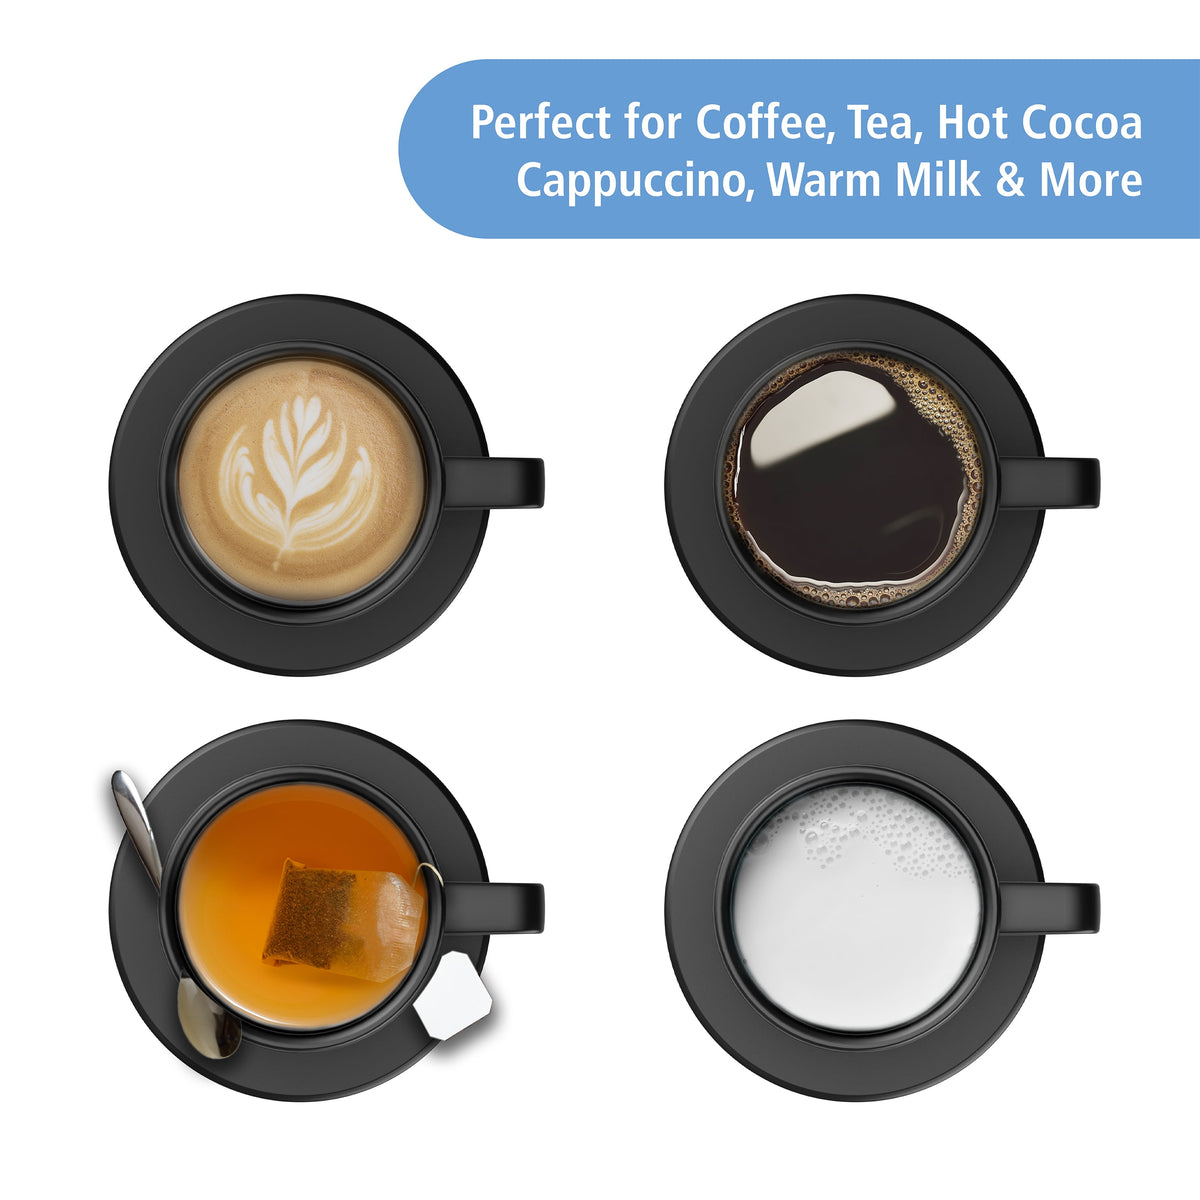 Warming Coffee Mug, 12Oz. Stainless Steel Coffee Mug with Mug Warmer Coaster and Lid